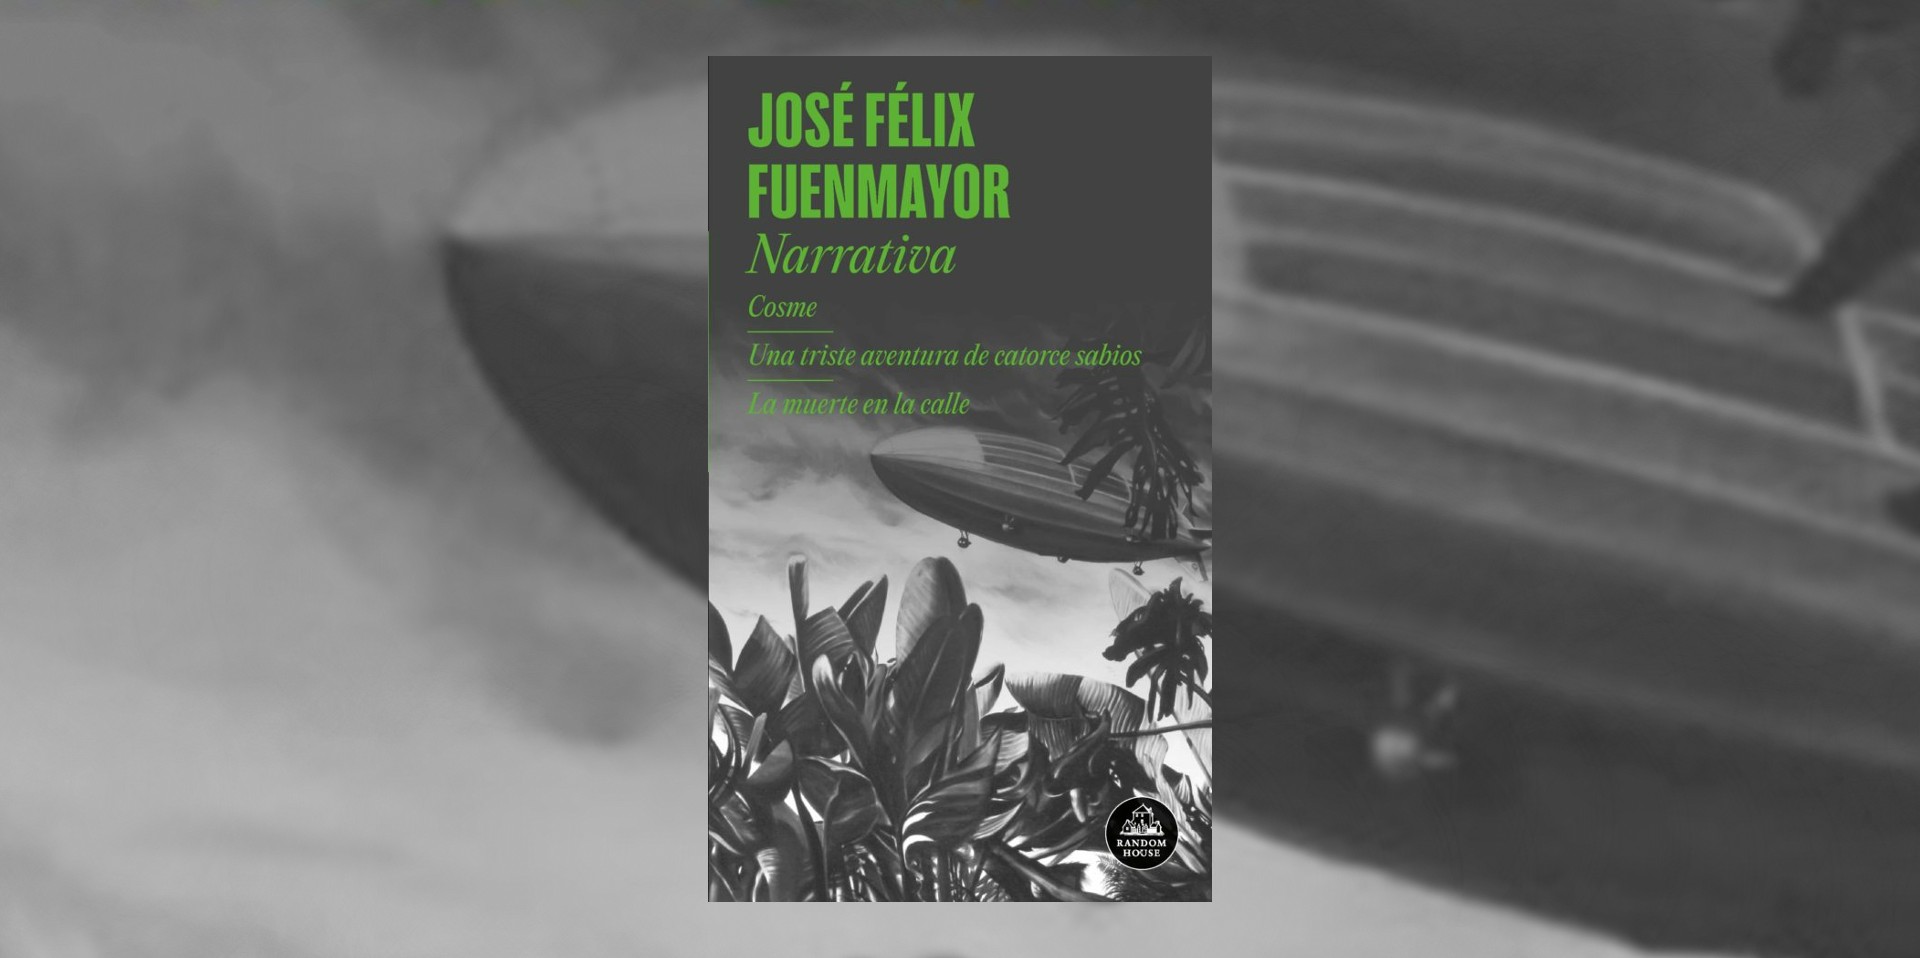 Portada del libro "Narrativa", de José Félix Fuenmayor. (Penguin Random House).